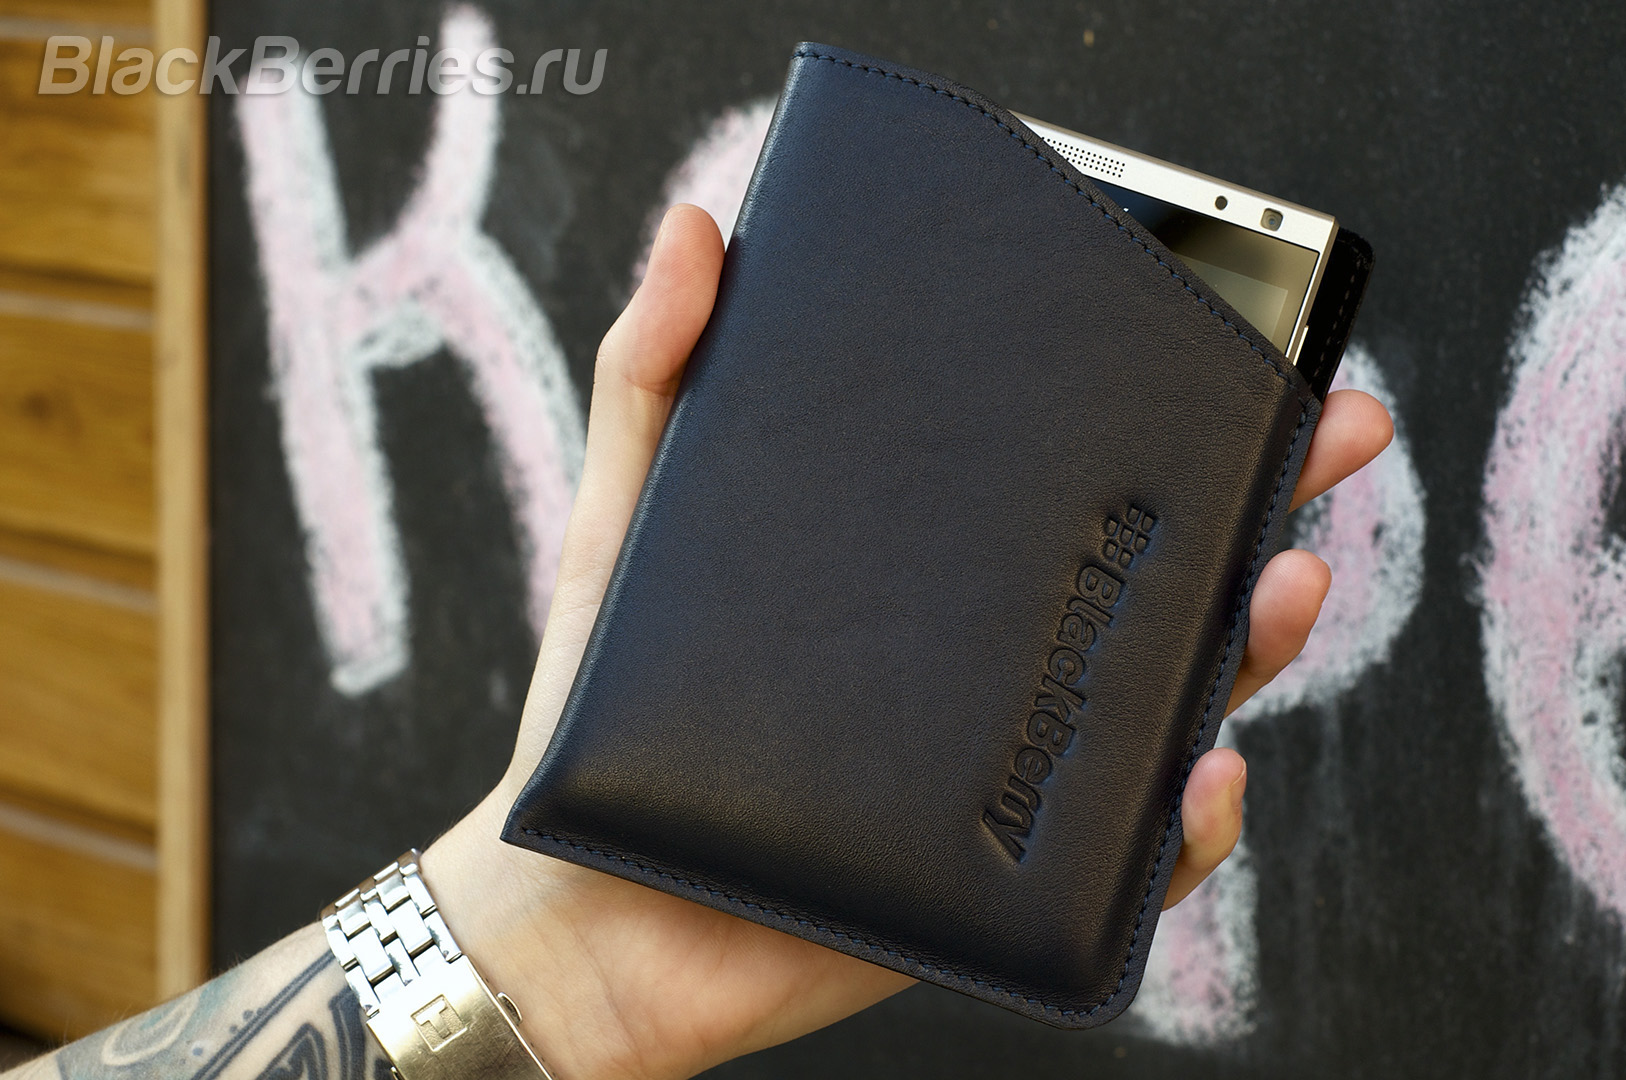 BlackBerry-Passport-Silver-Cases-22